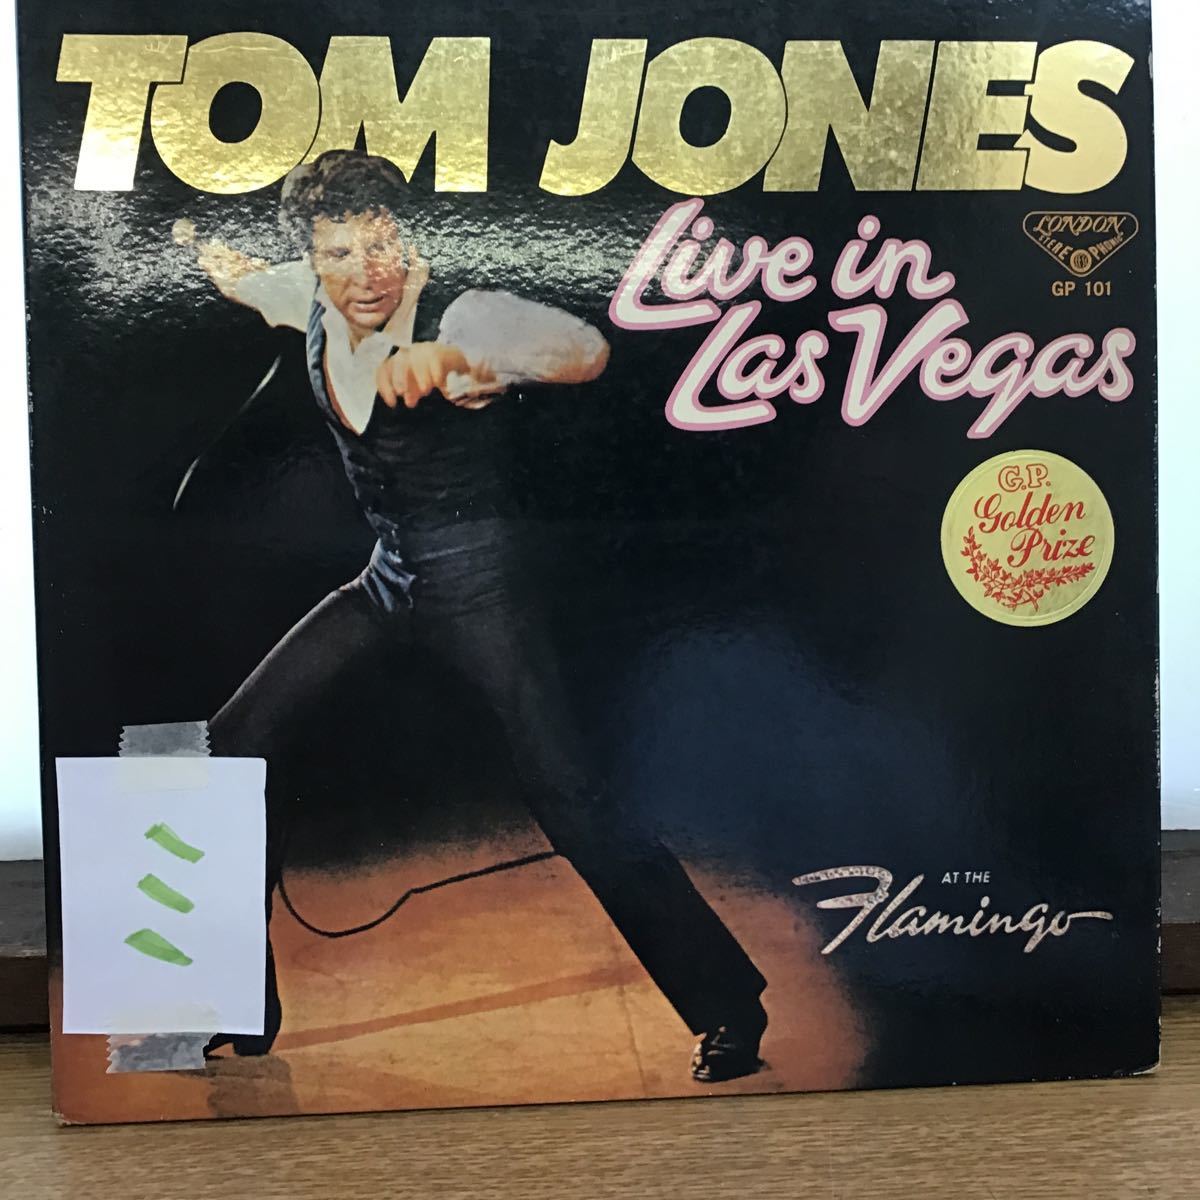 TOM JONES GOLDEN PRIZE LIVE IN LAS VEGAS トムジョーンズ　ゴールデン・プライズ　ライブ・イン・ラスヴェガス　GP 101 ミ①_画像1